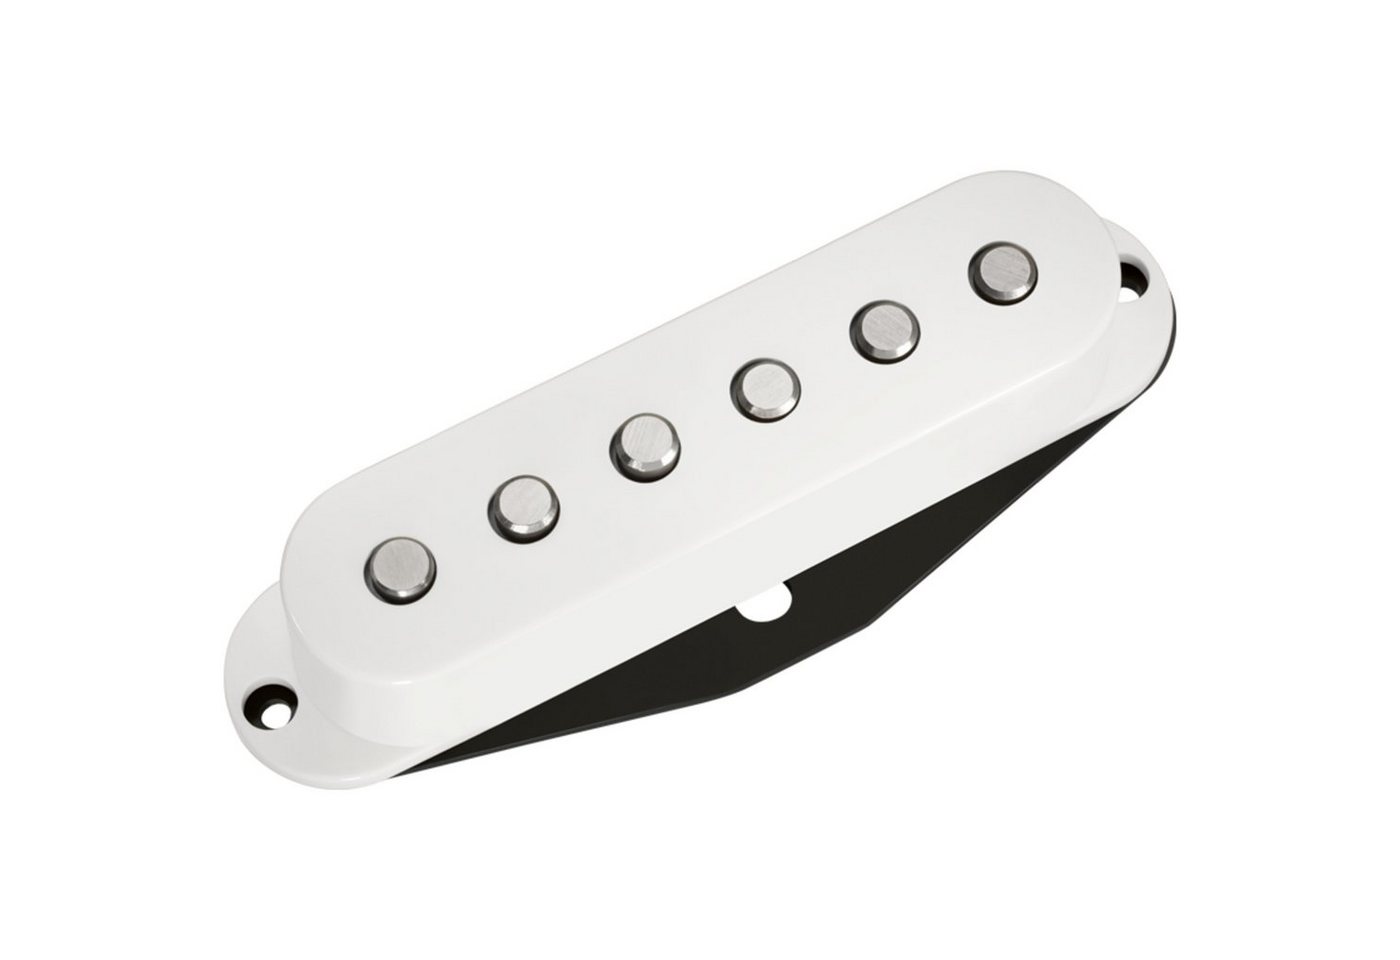 DiMarzio Tonabnehmer, (DP423 Injector Bridge White), DP423 Injector Bridge White - Humbucker Tonabnehmer für Gitarren von DiMarzio